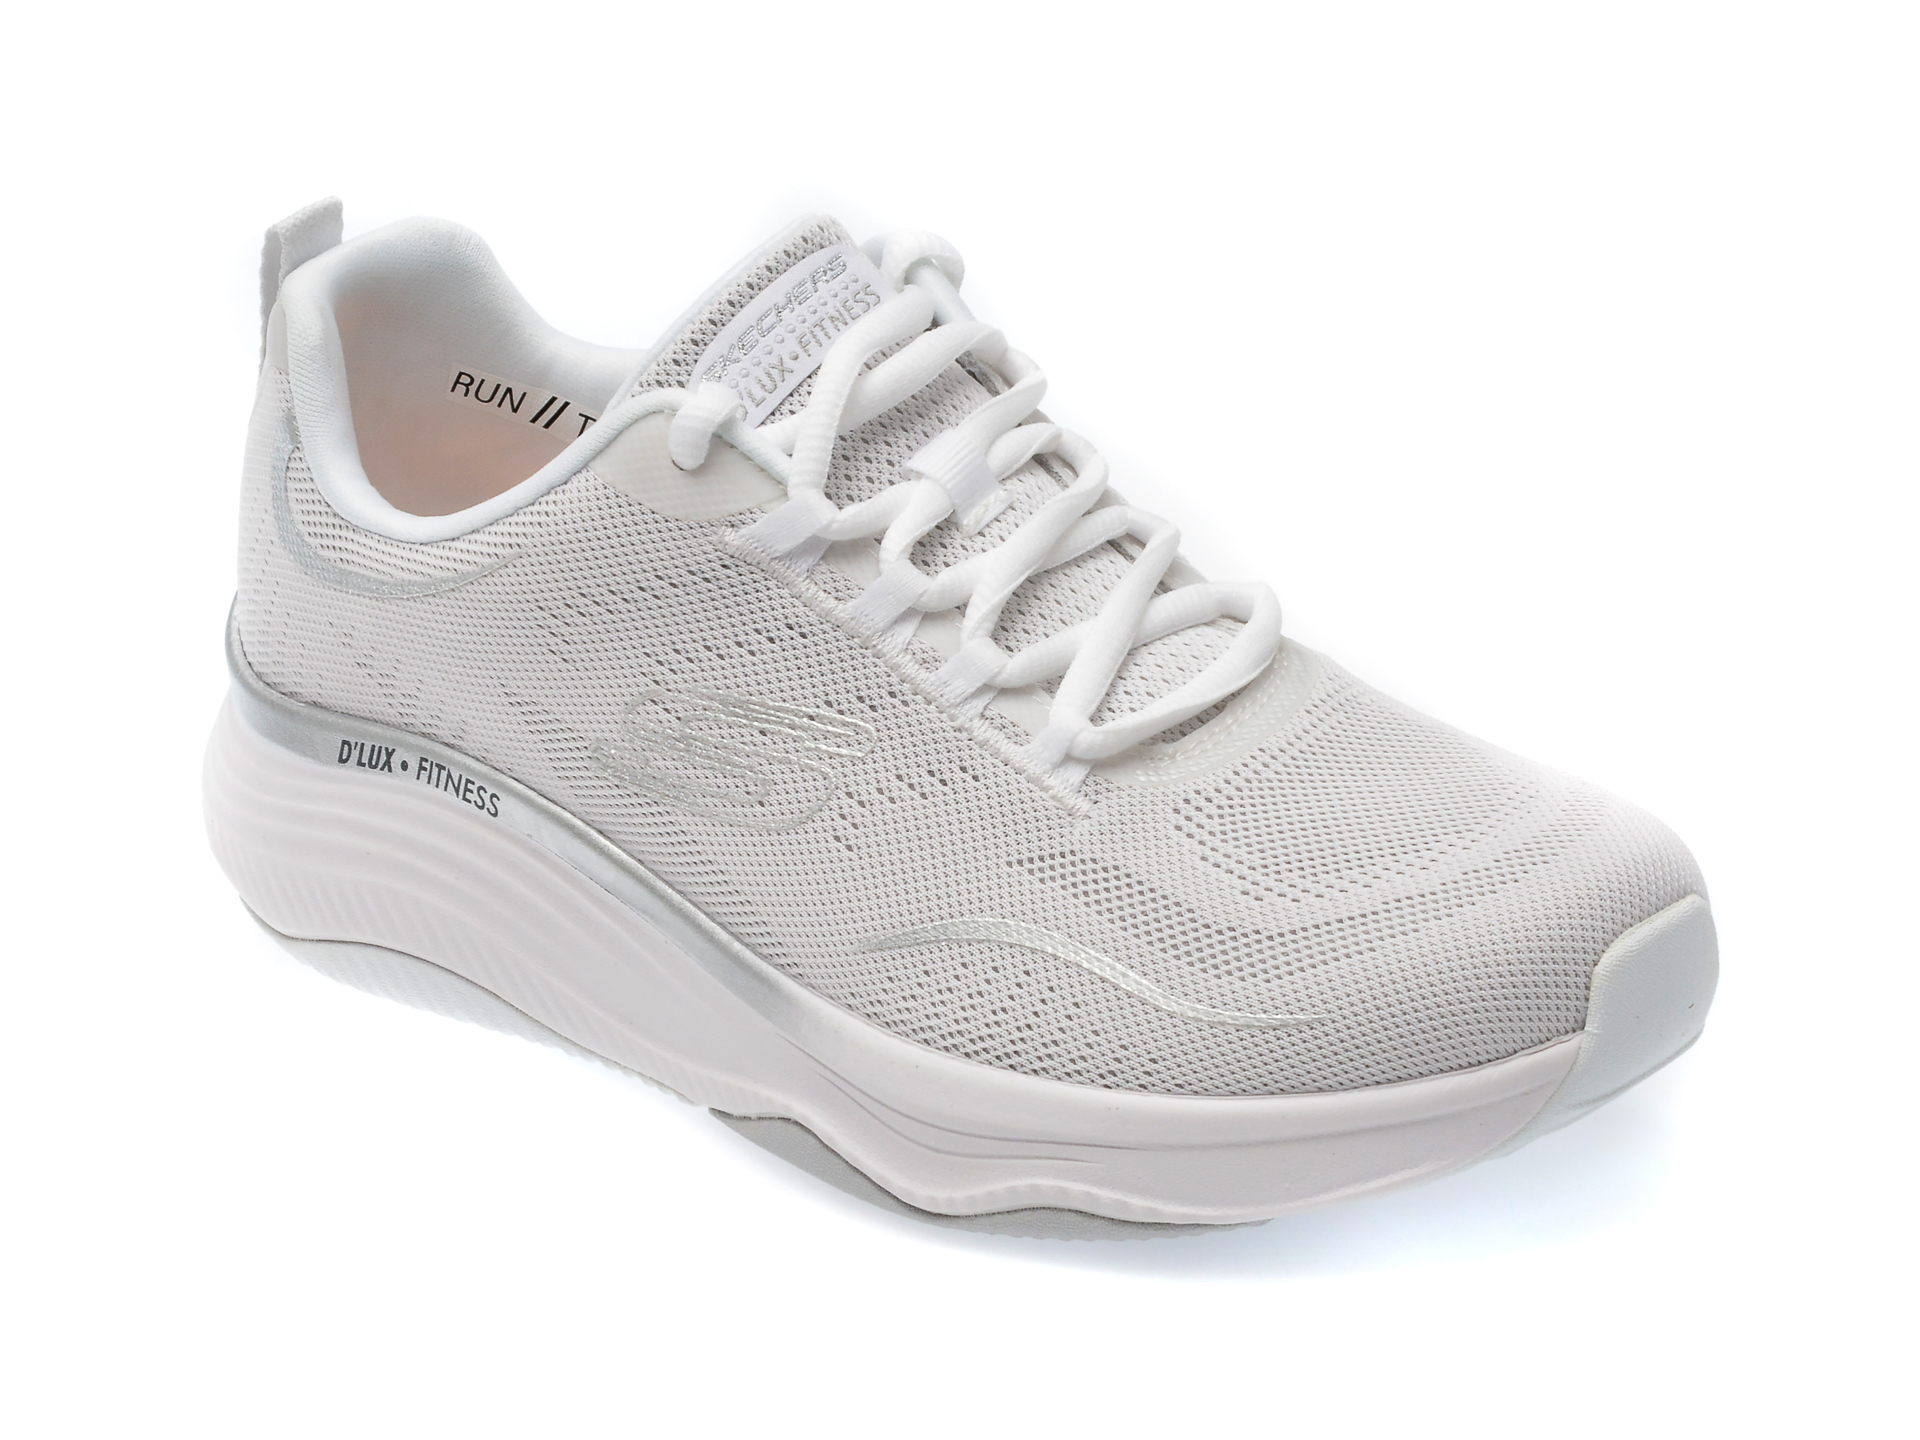 Pantofi SKECHERS albi, D LUX FITNESS, din material textil Answear 2023-06-09